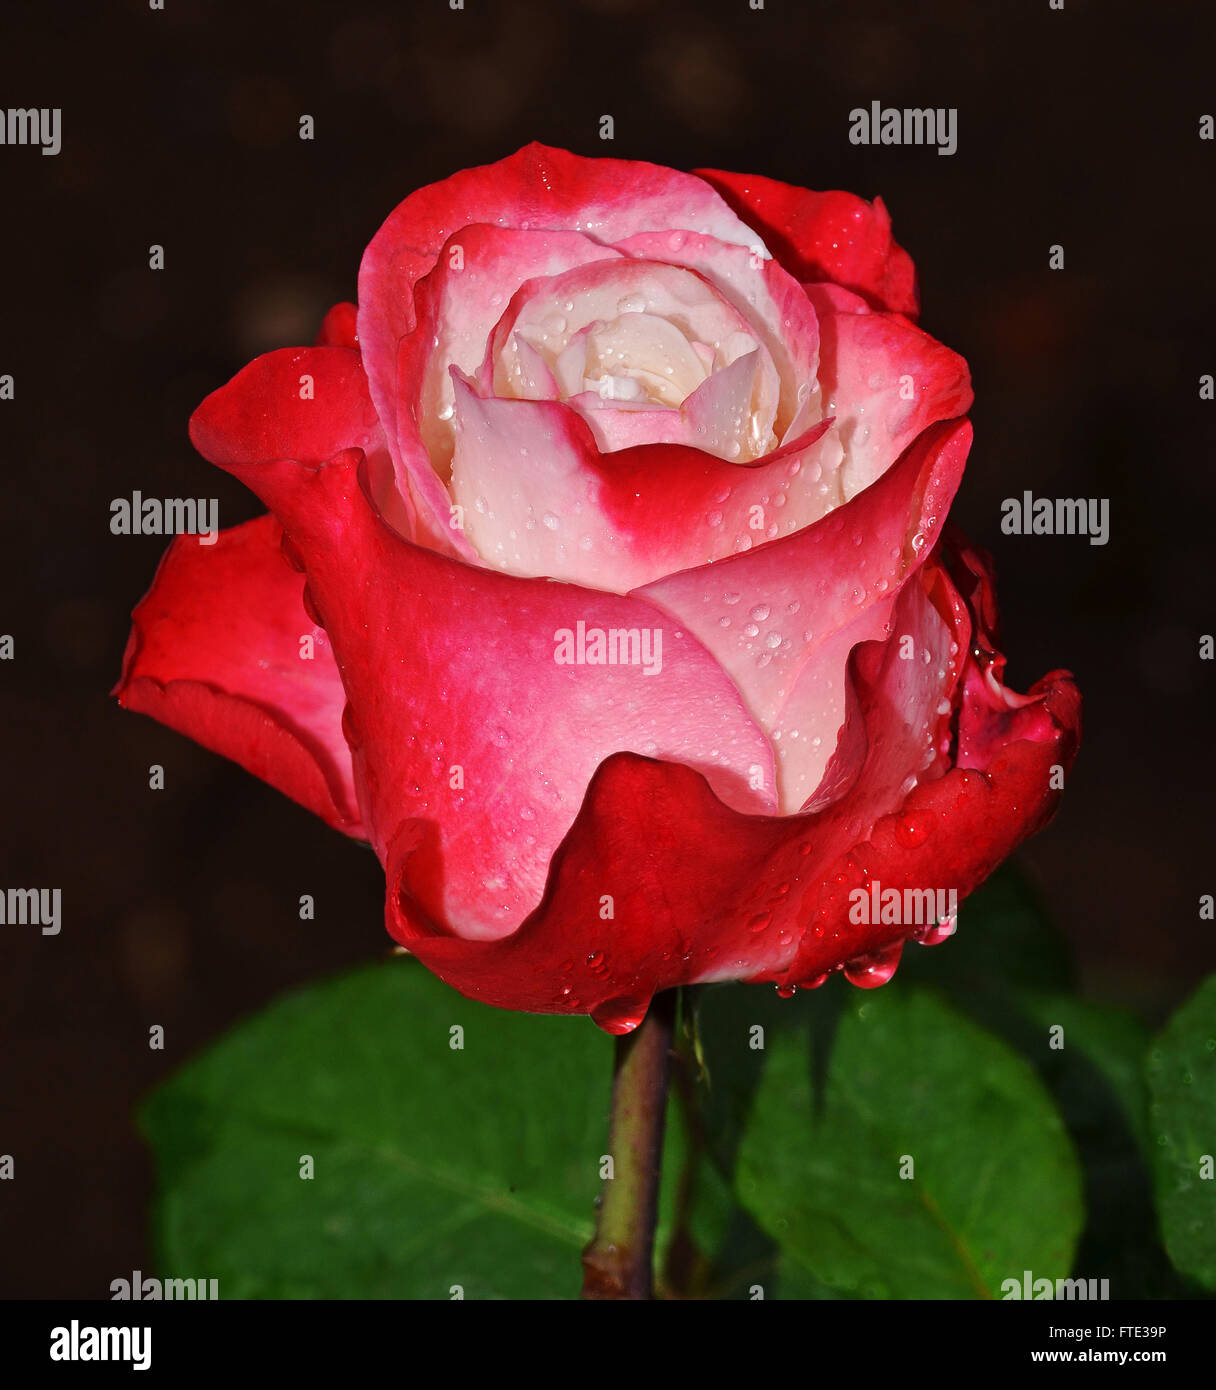 closeup of rose on black background Stock Photo